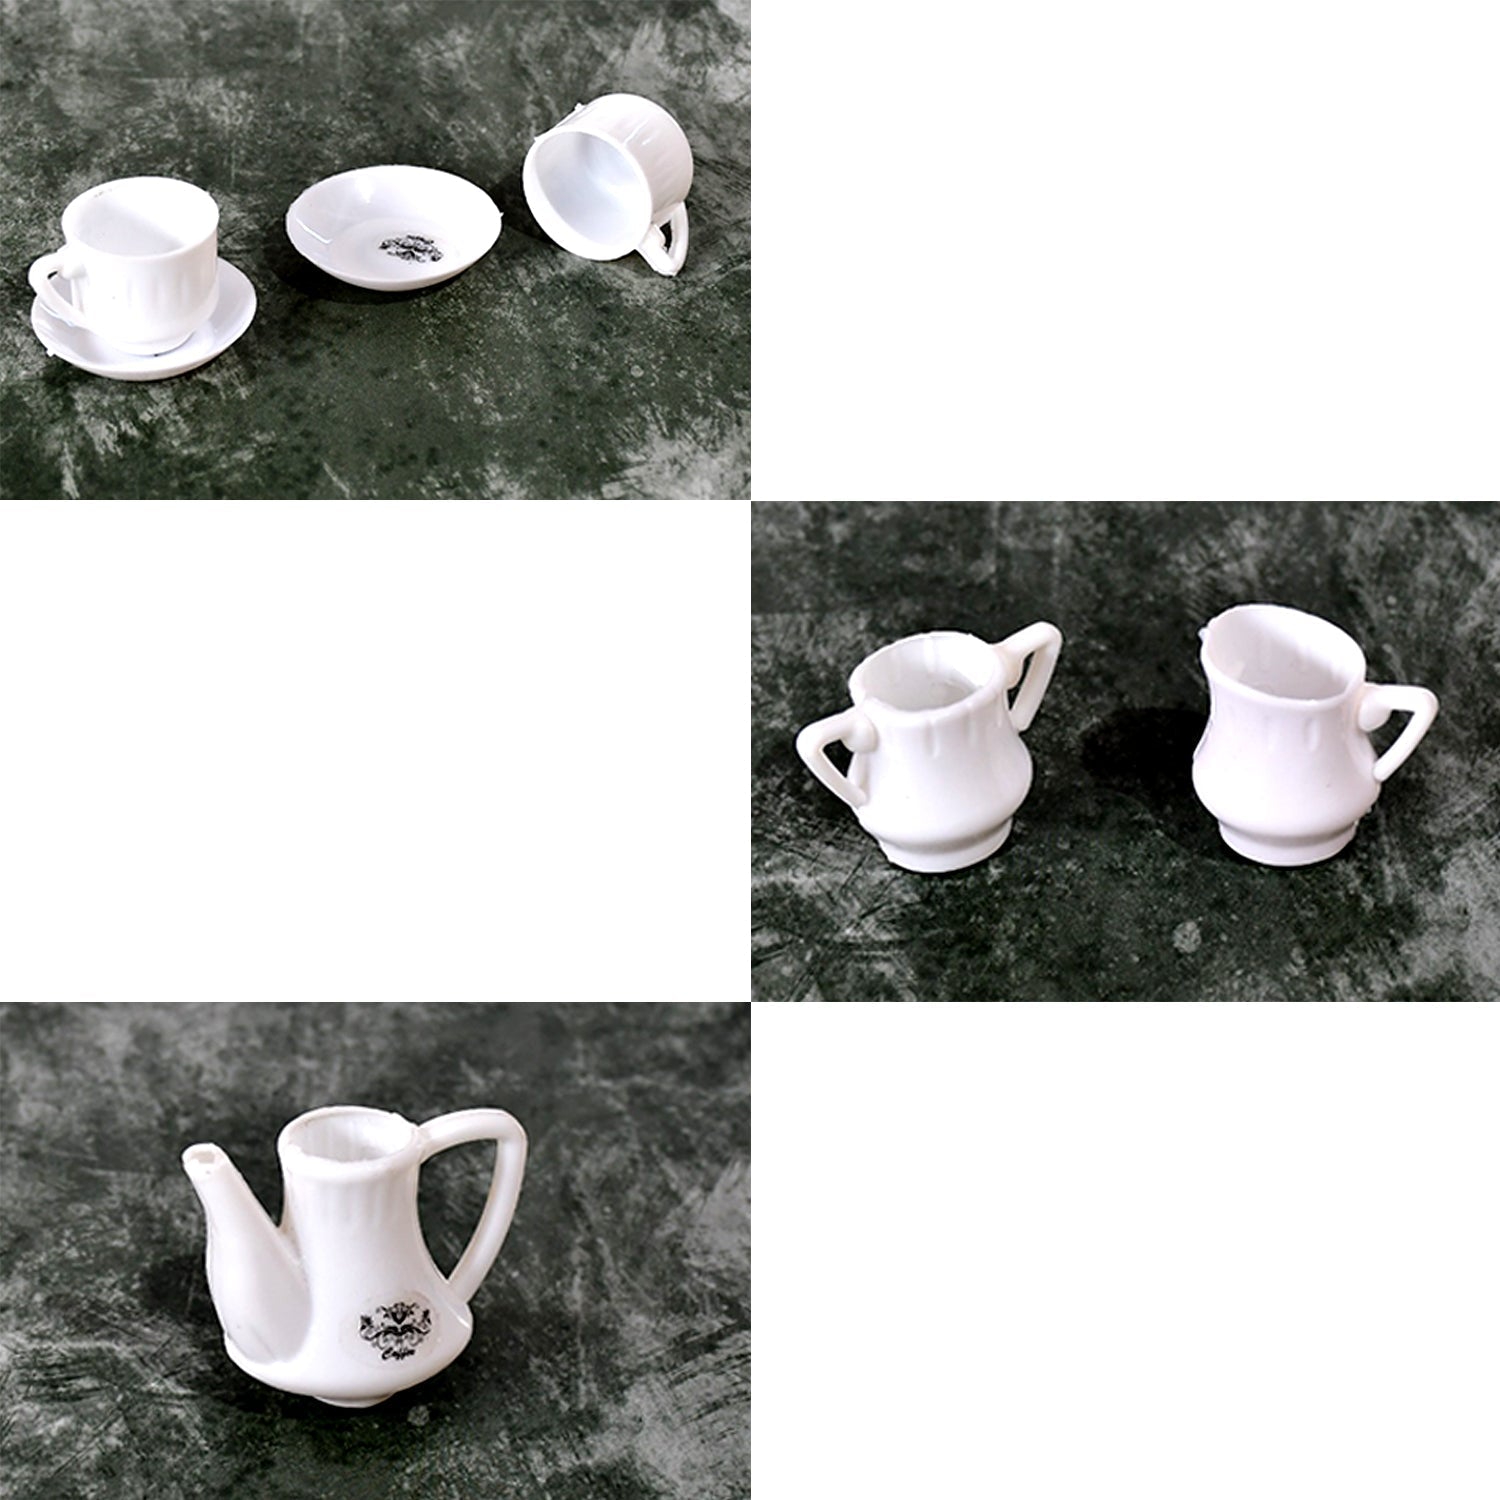 4445 ﻿Tickles Tea toy Set | Coffee Kitchen Plastic Set Toy for Kids, Boys & Girls (15Pcs) DeoDap